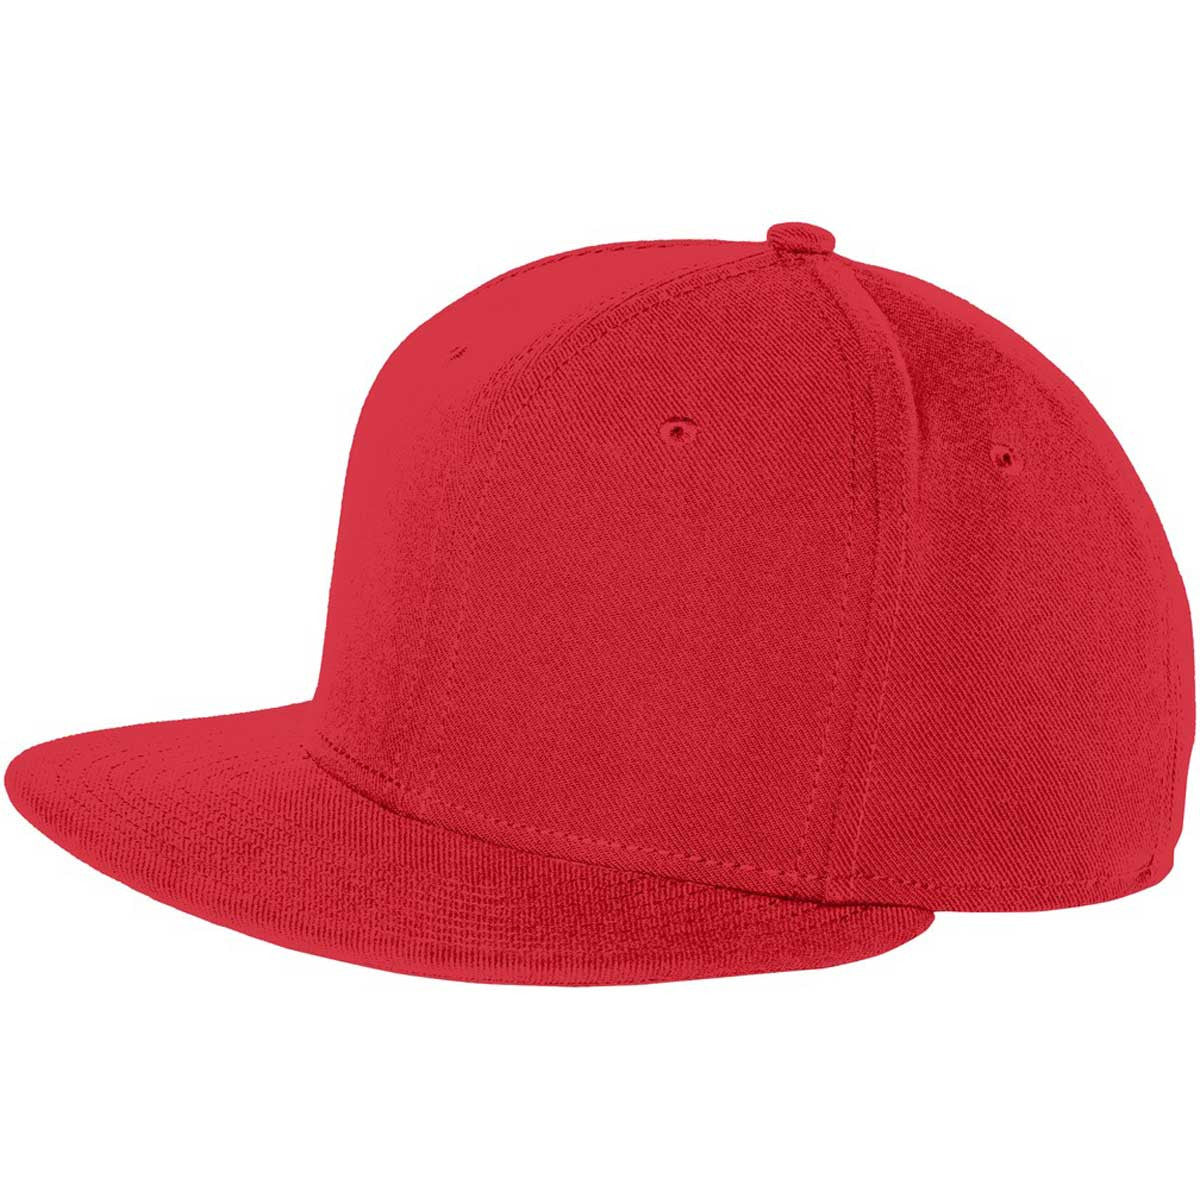 New Era Original Scarlet Cap Snapback Fit 9FIFTY Flat Bill